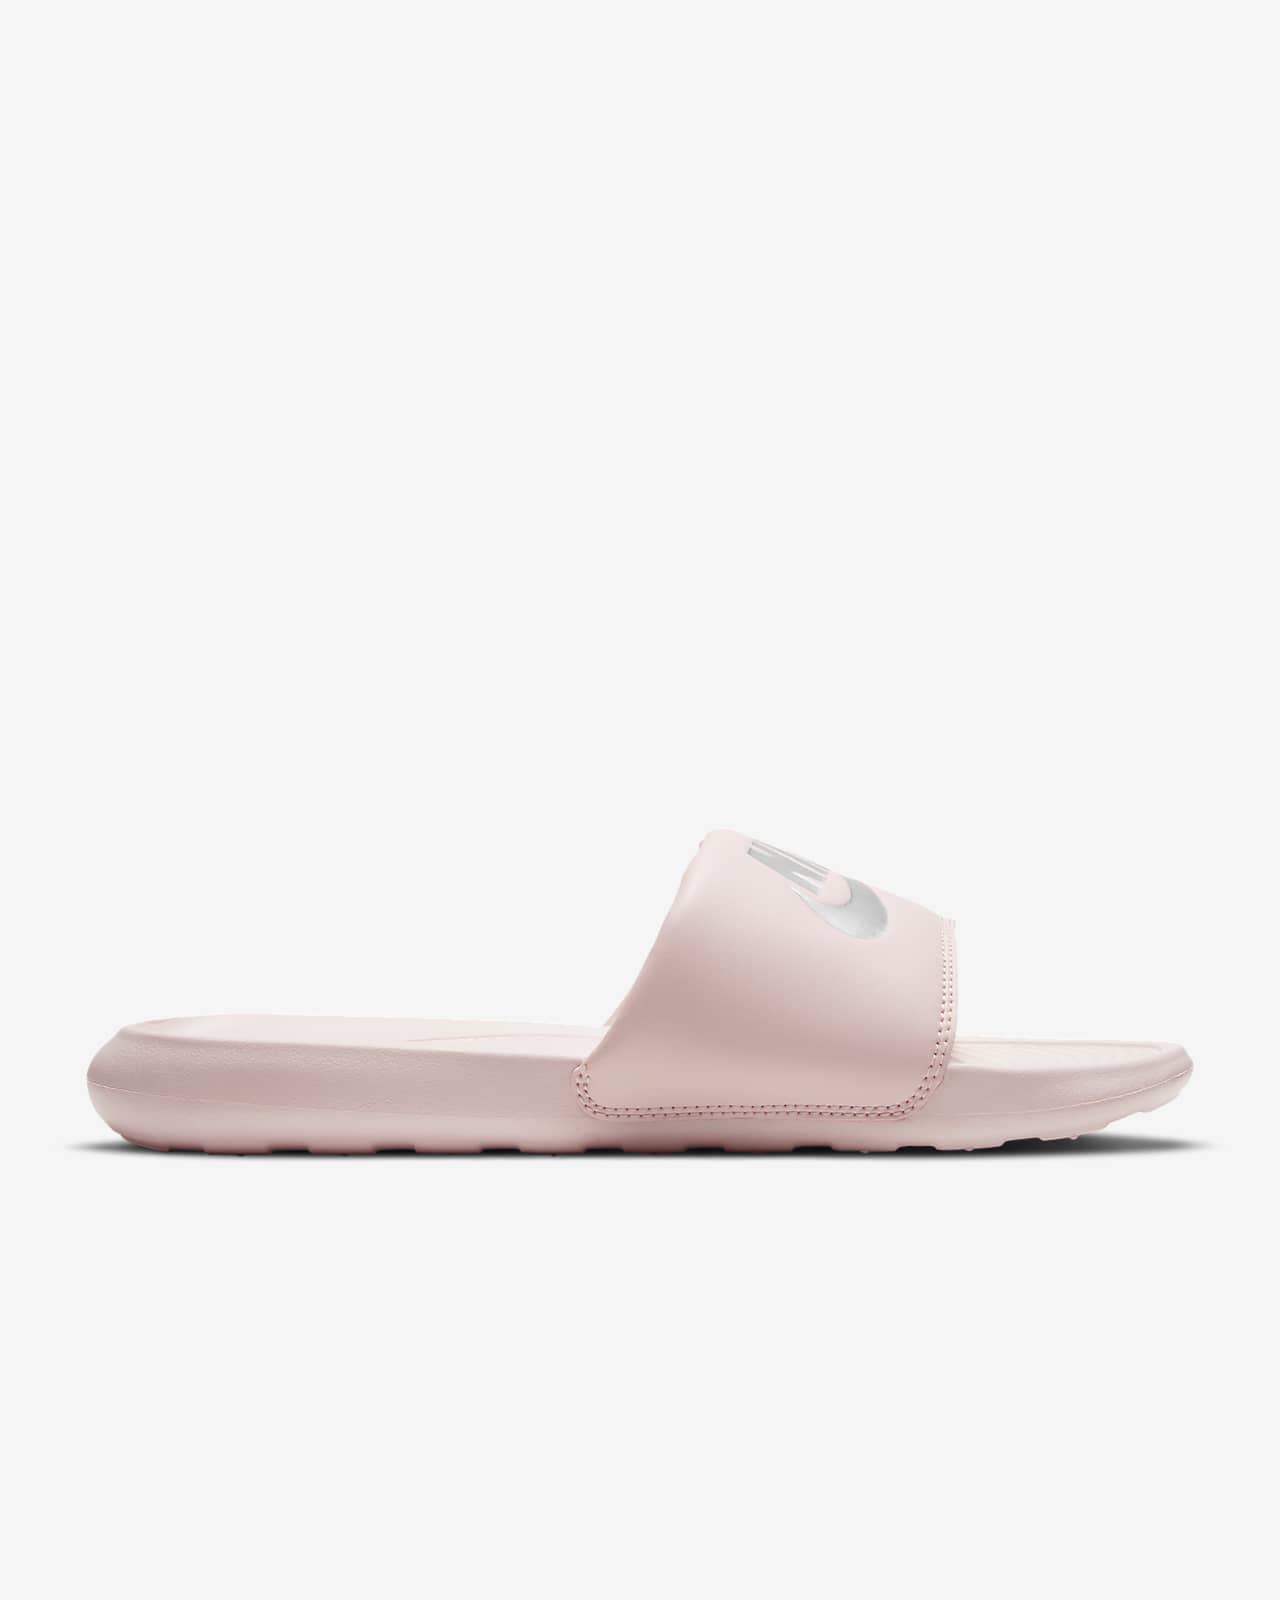 Nike Victori One Slide - Women's Pink/Silver Size 12.0 - Womens